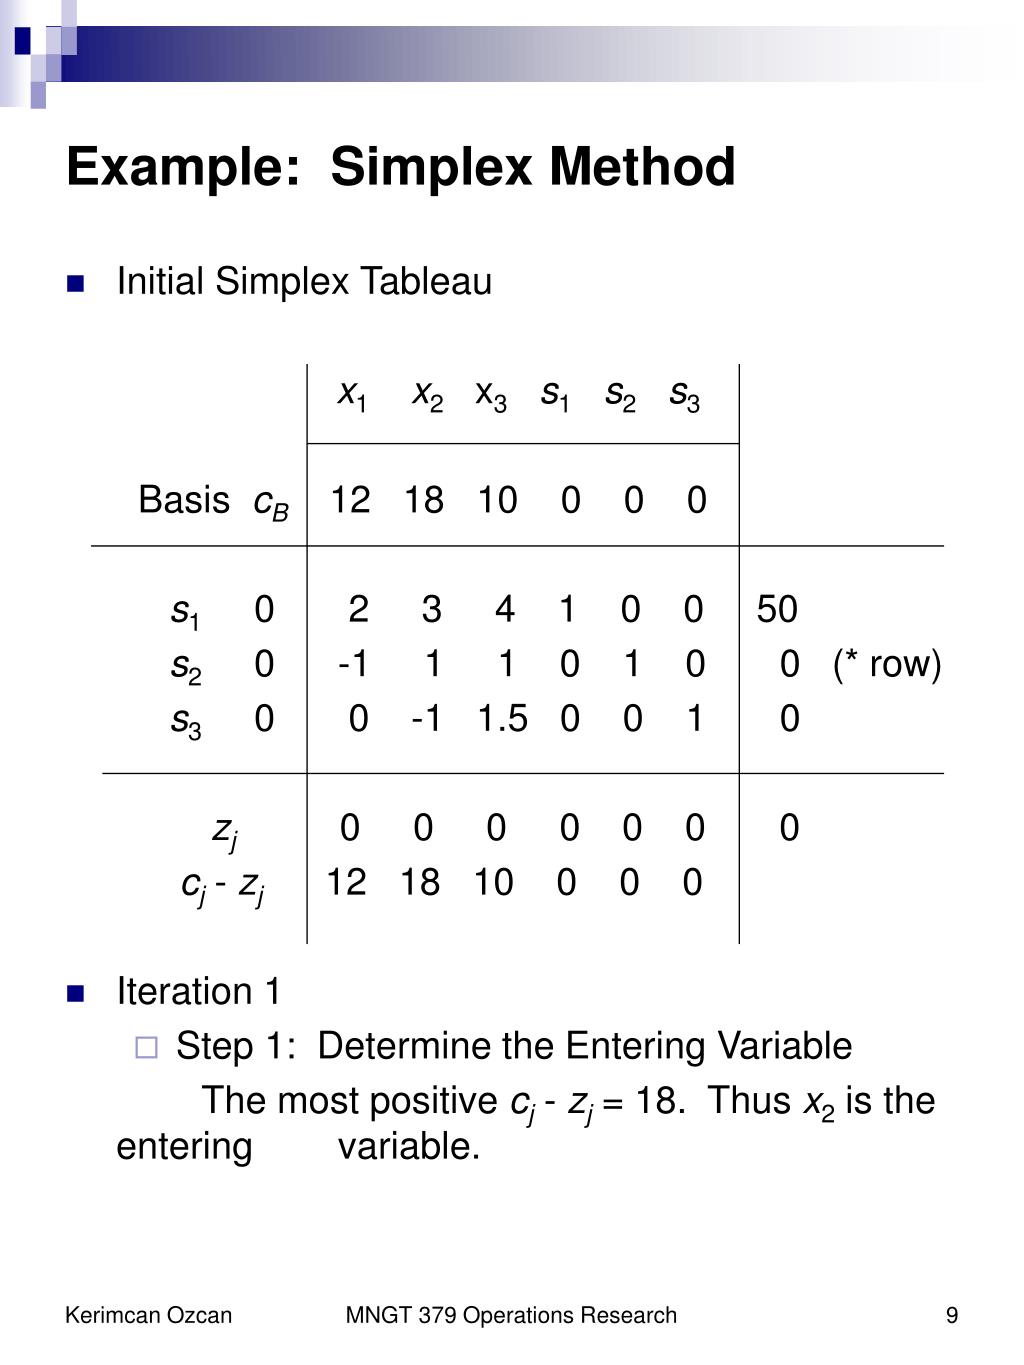 linear programming simplex method example